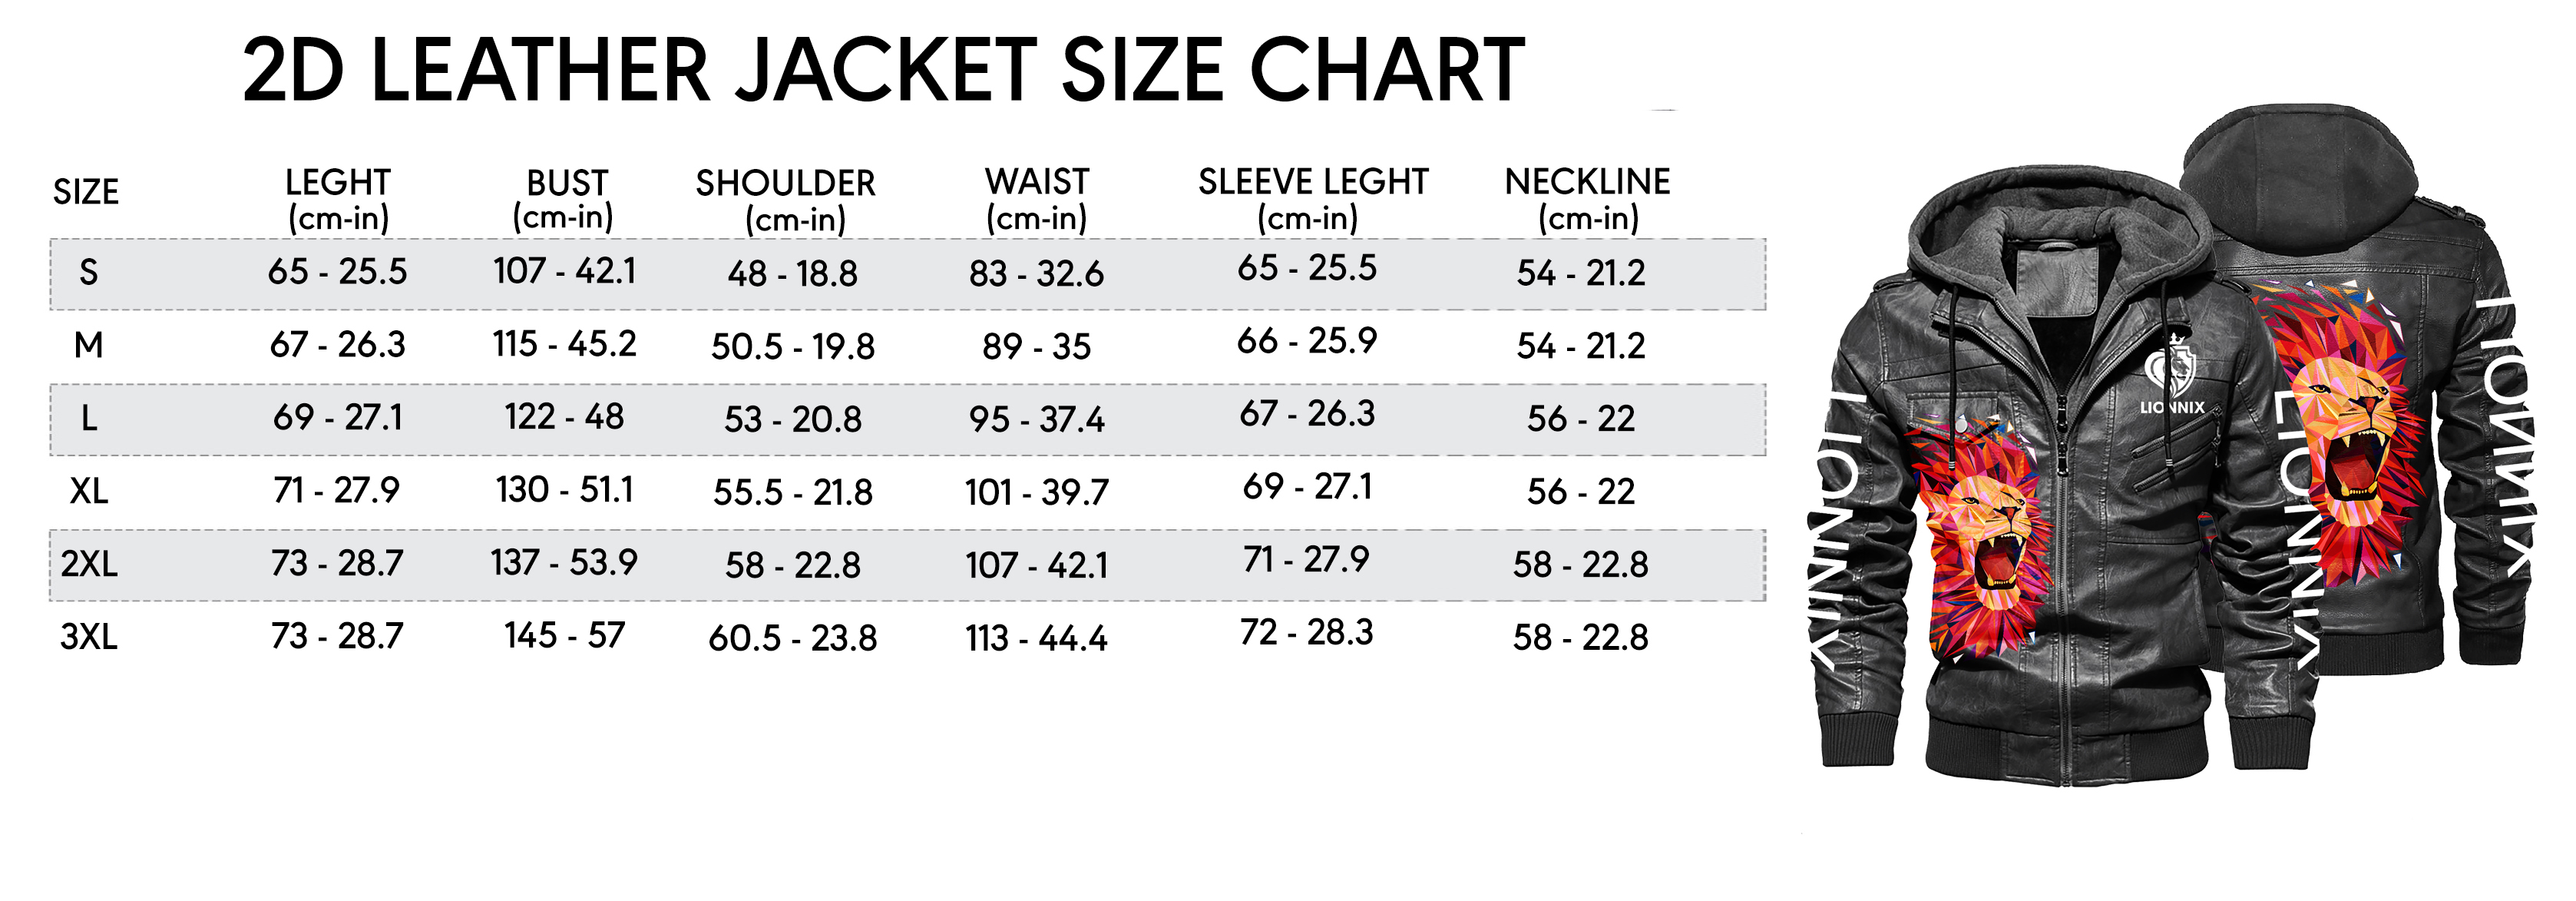 2d leather jacket size chart